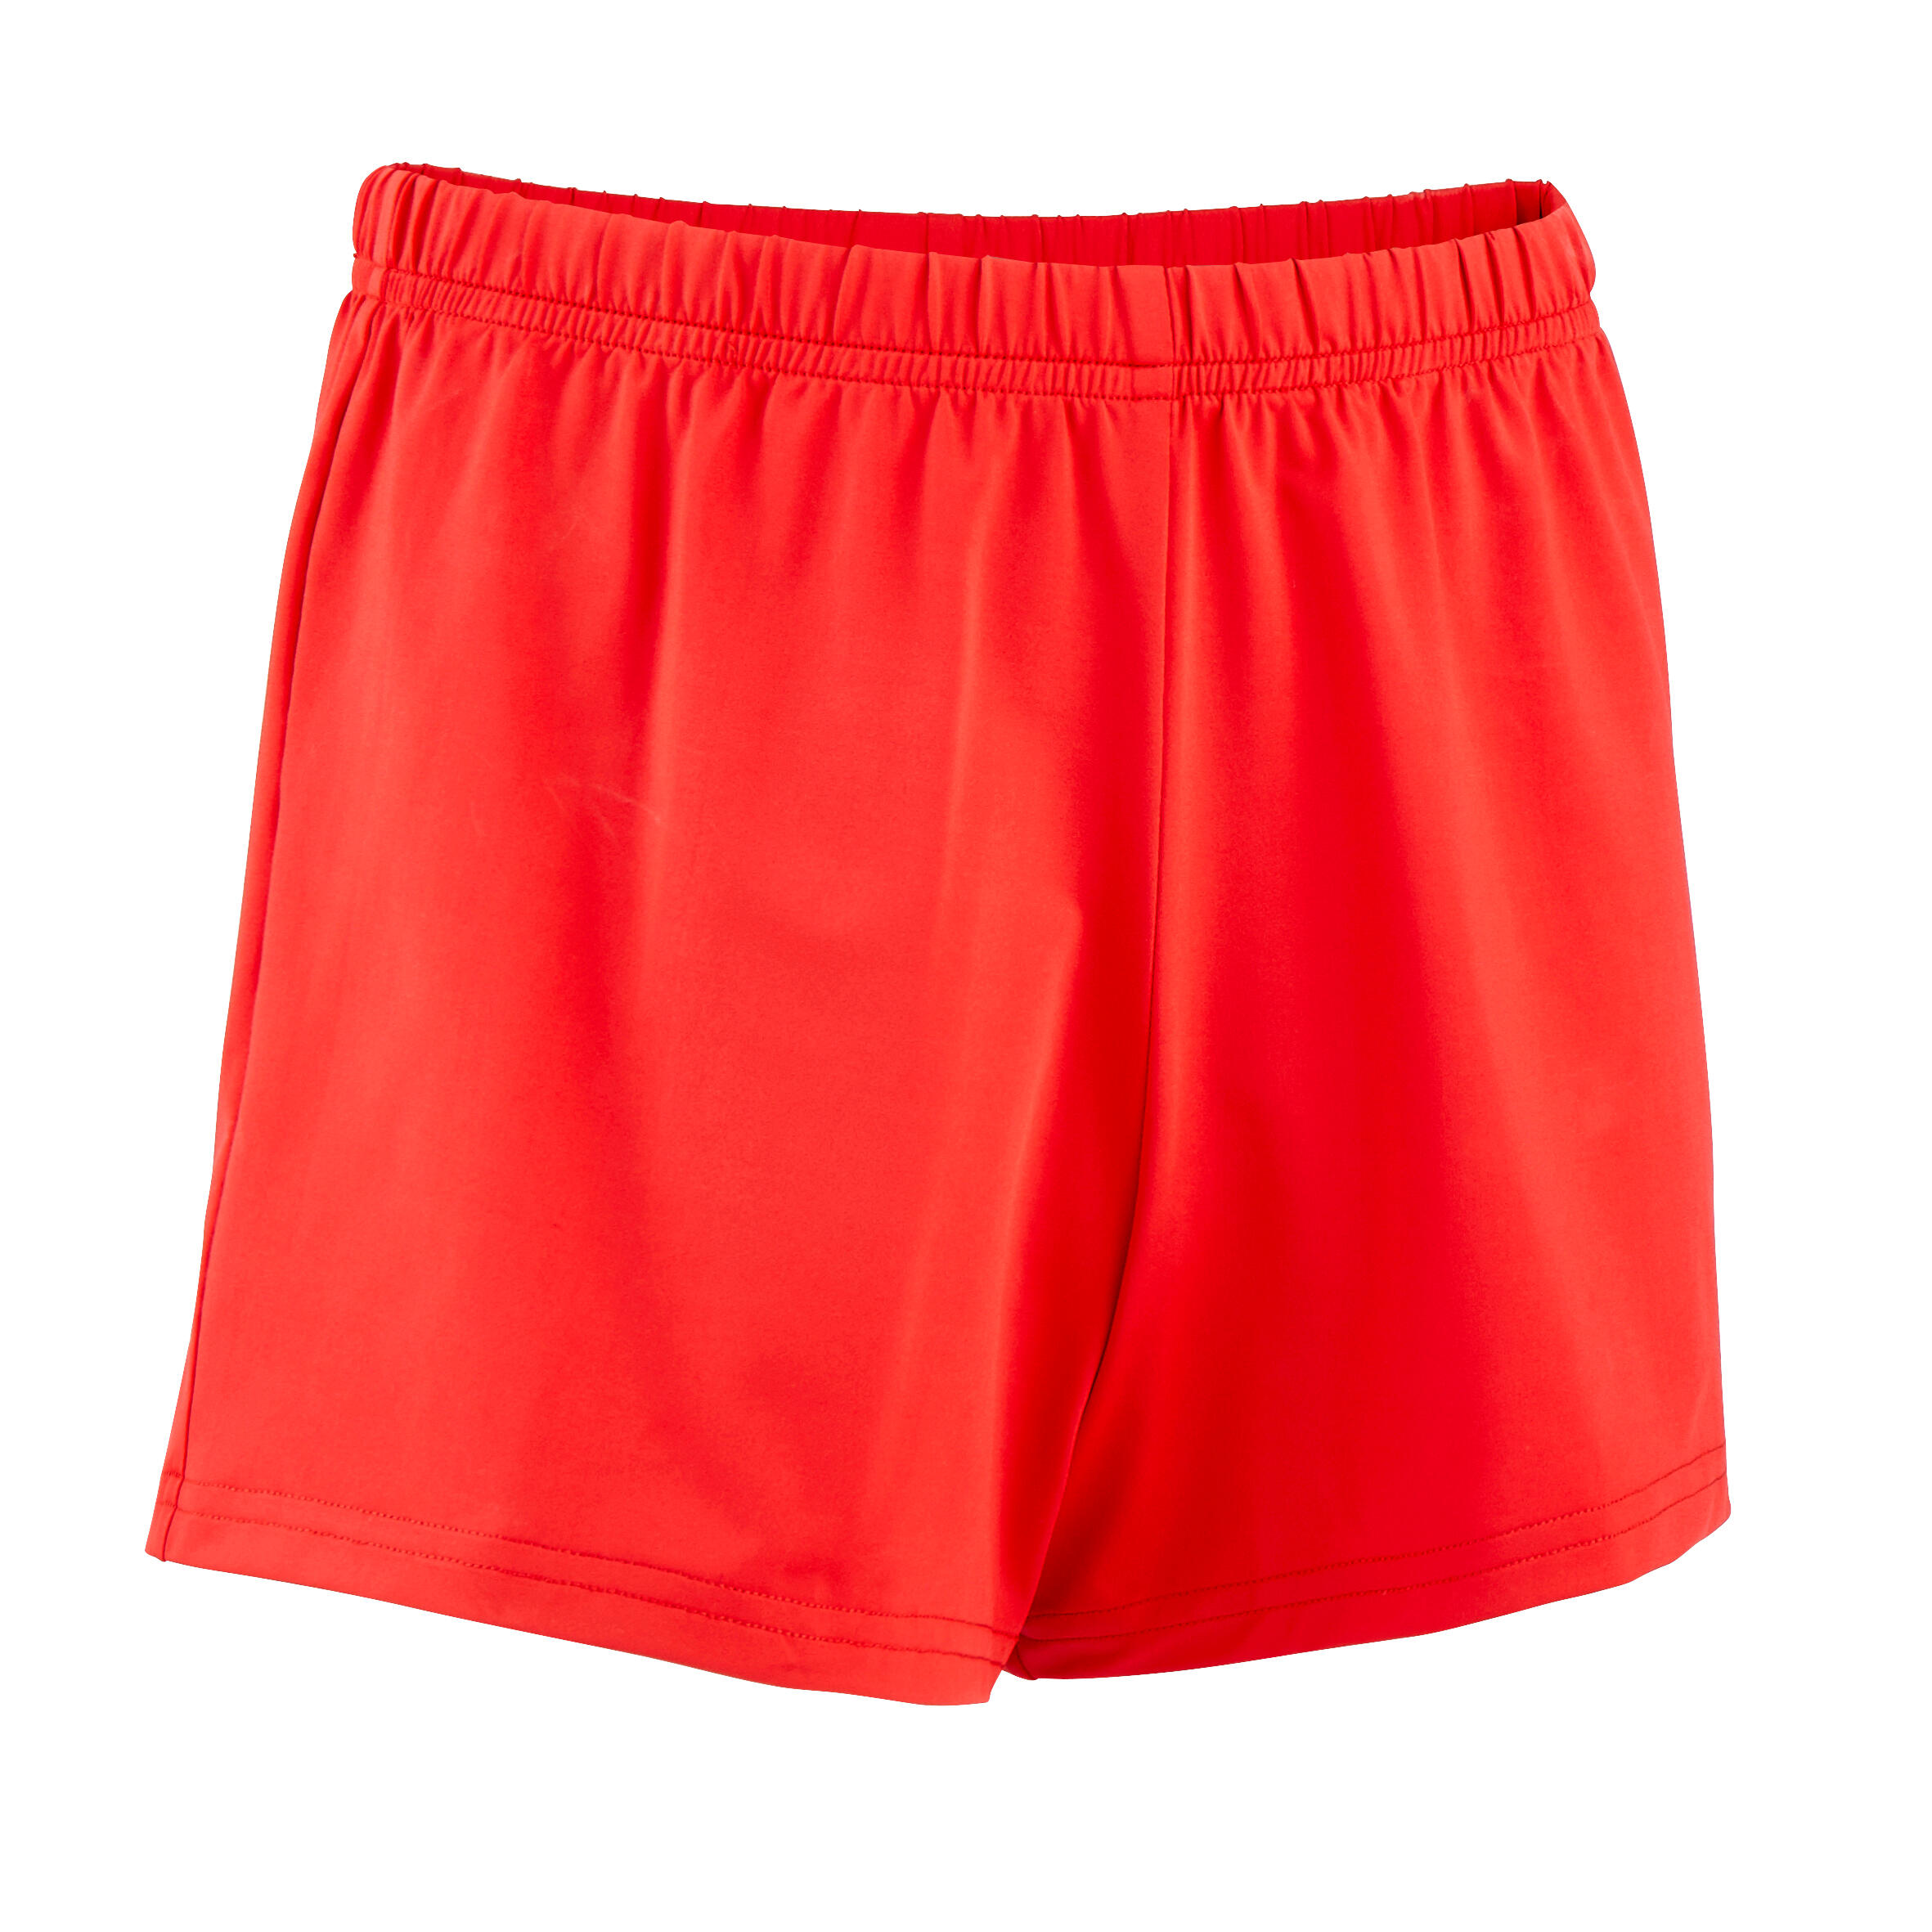 DOMYOS Boys' Gymnastics Shorts - Red